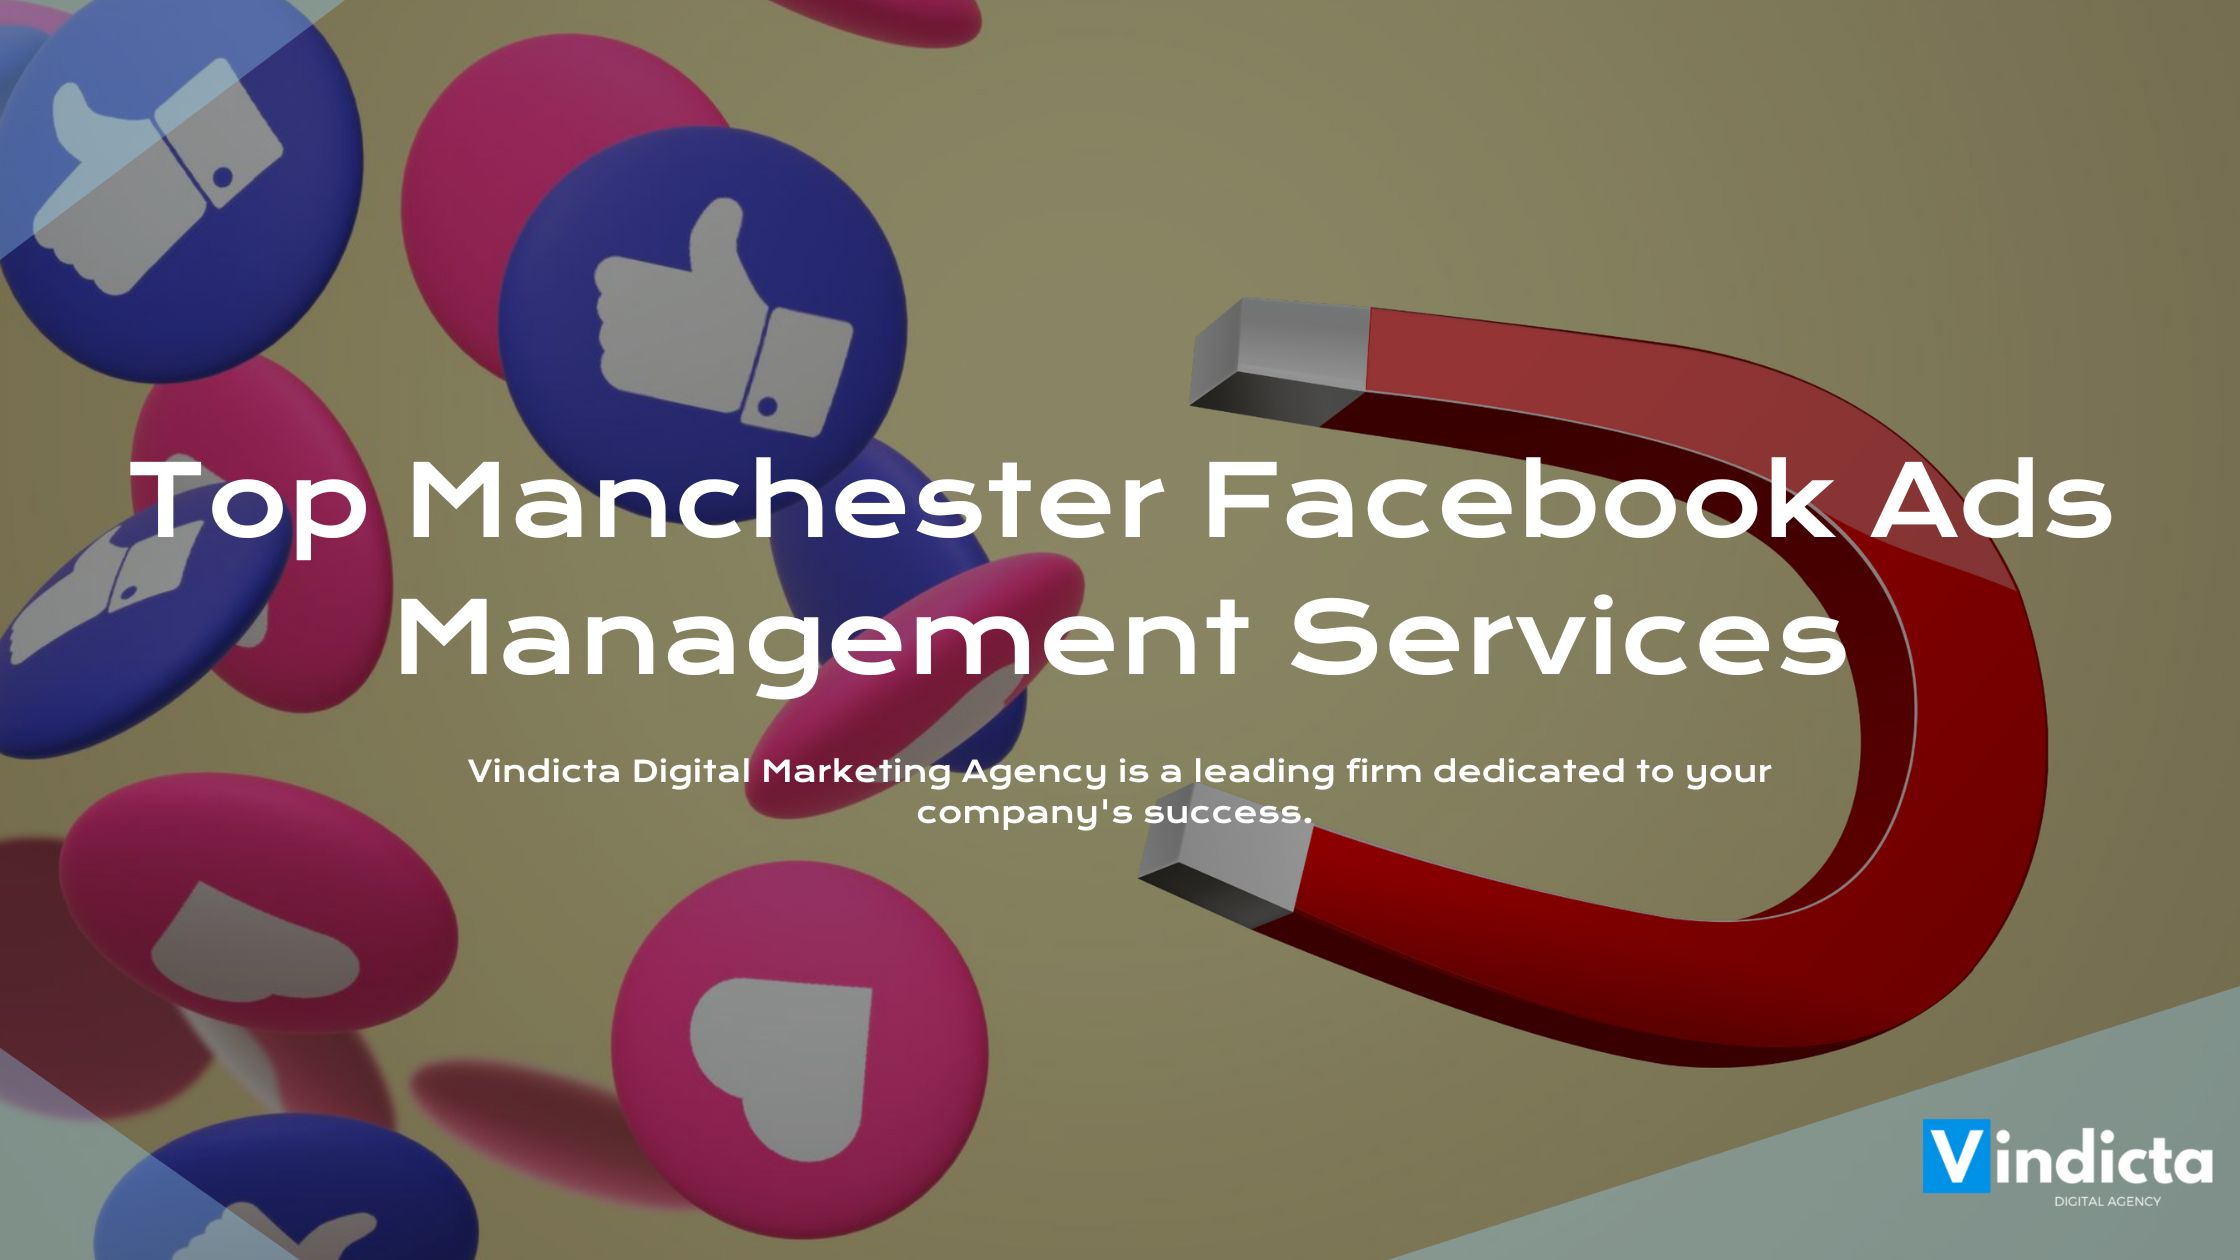 Top Manchester Facebook Ads Management Services